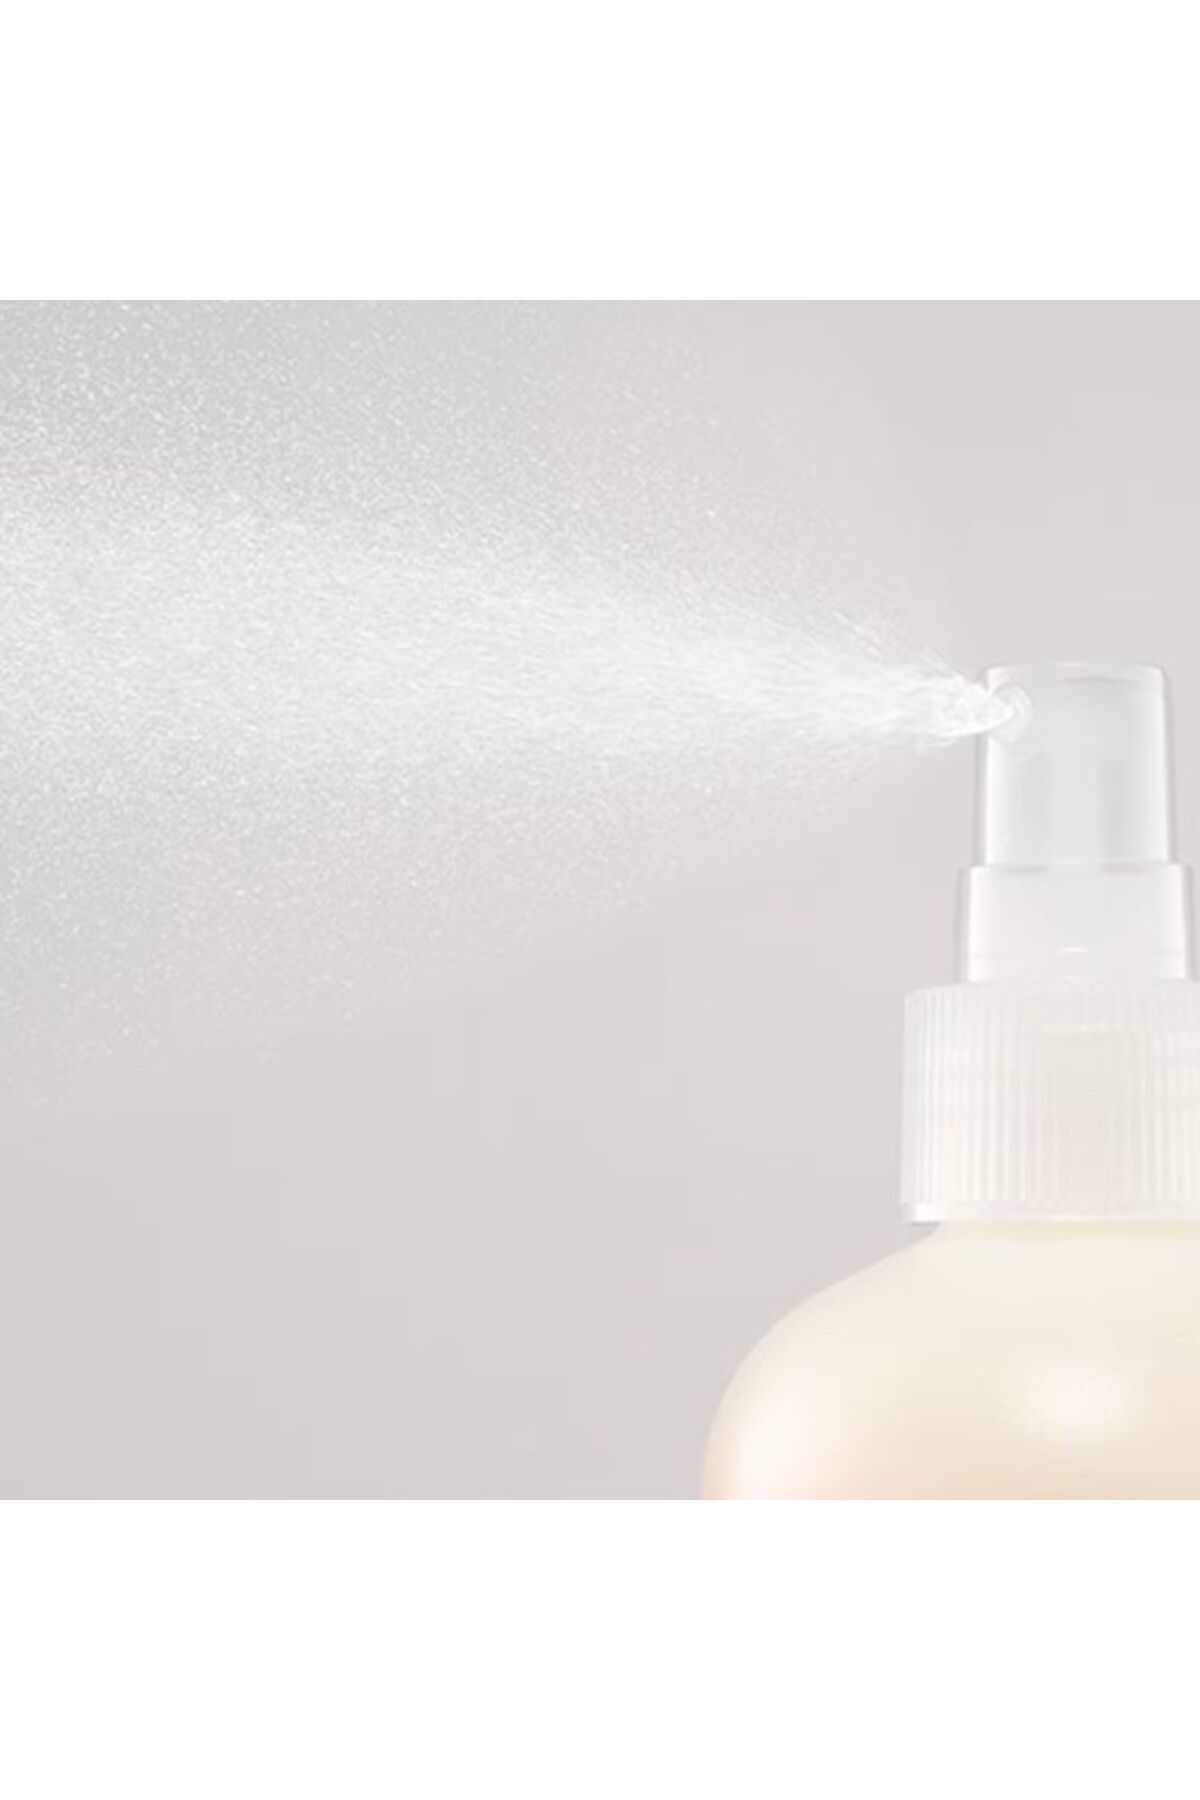 Sephora Bumble & Bumble Hairdresser's Invisible Oil Heat - UV Protective Primer-8.5 FL.OZ.